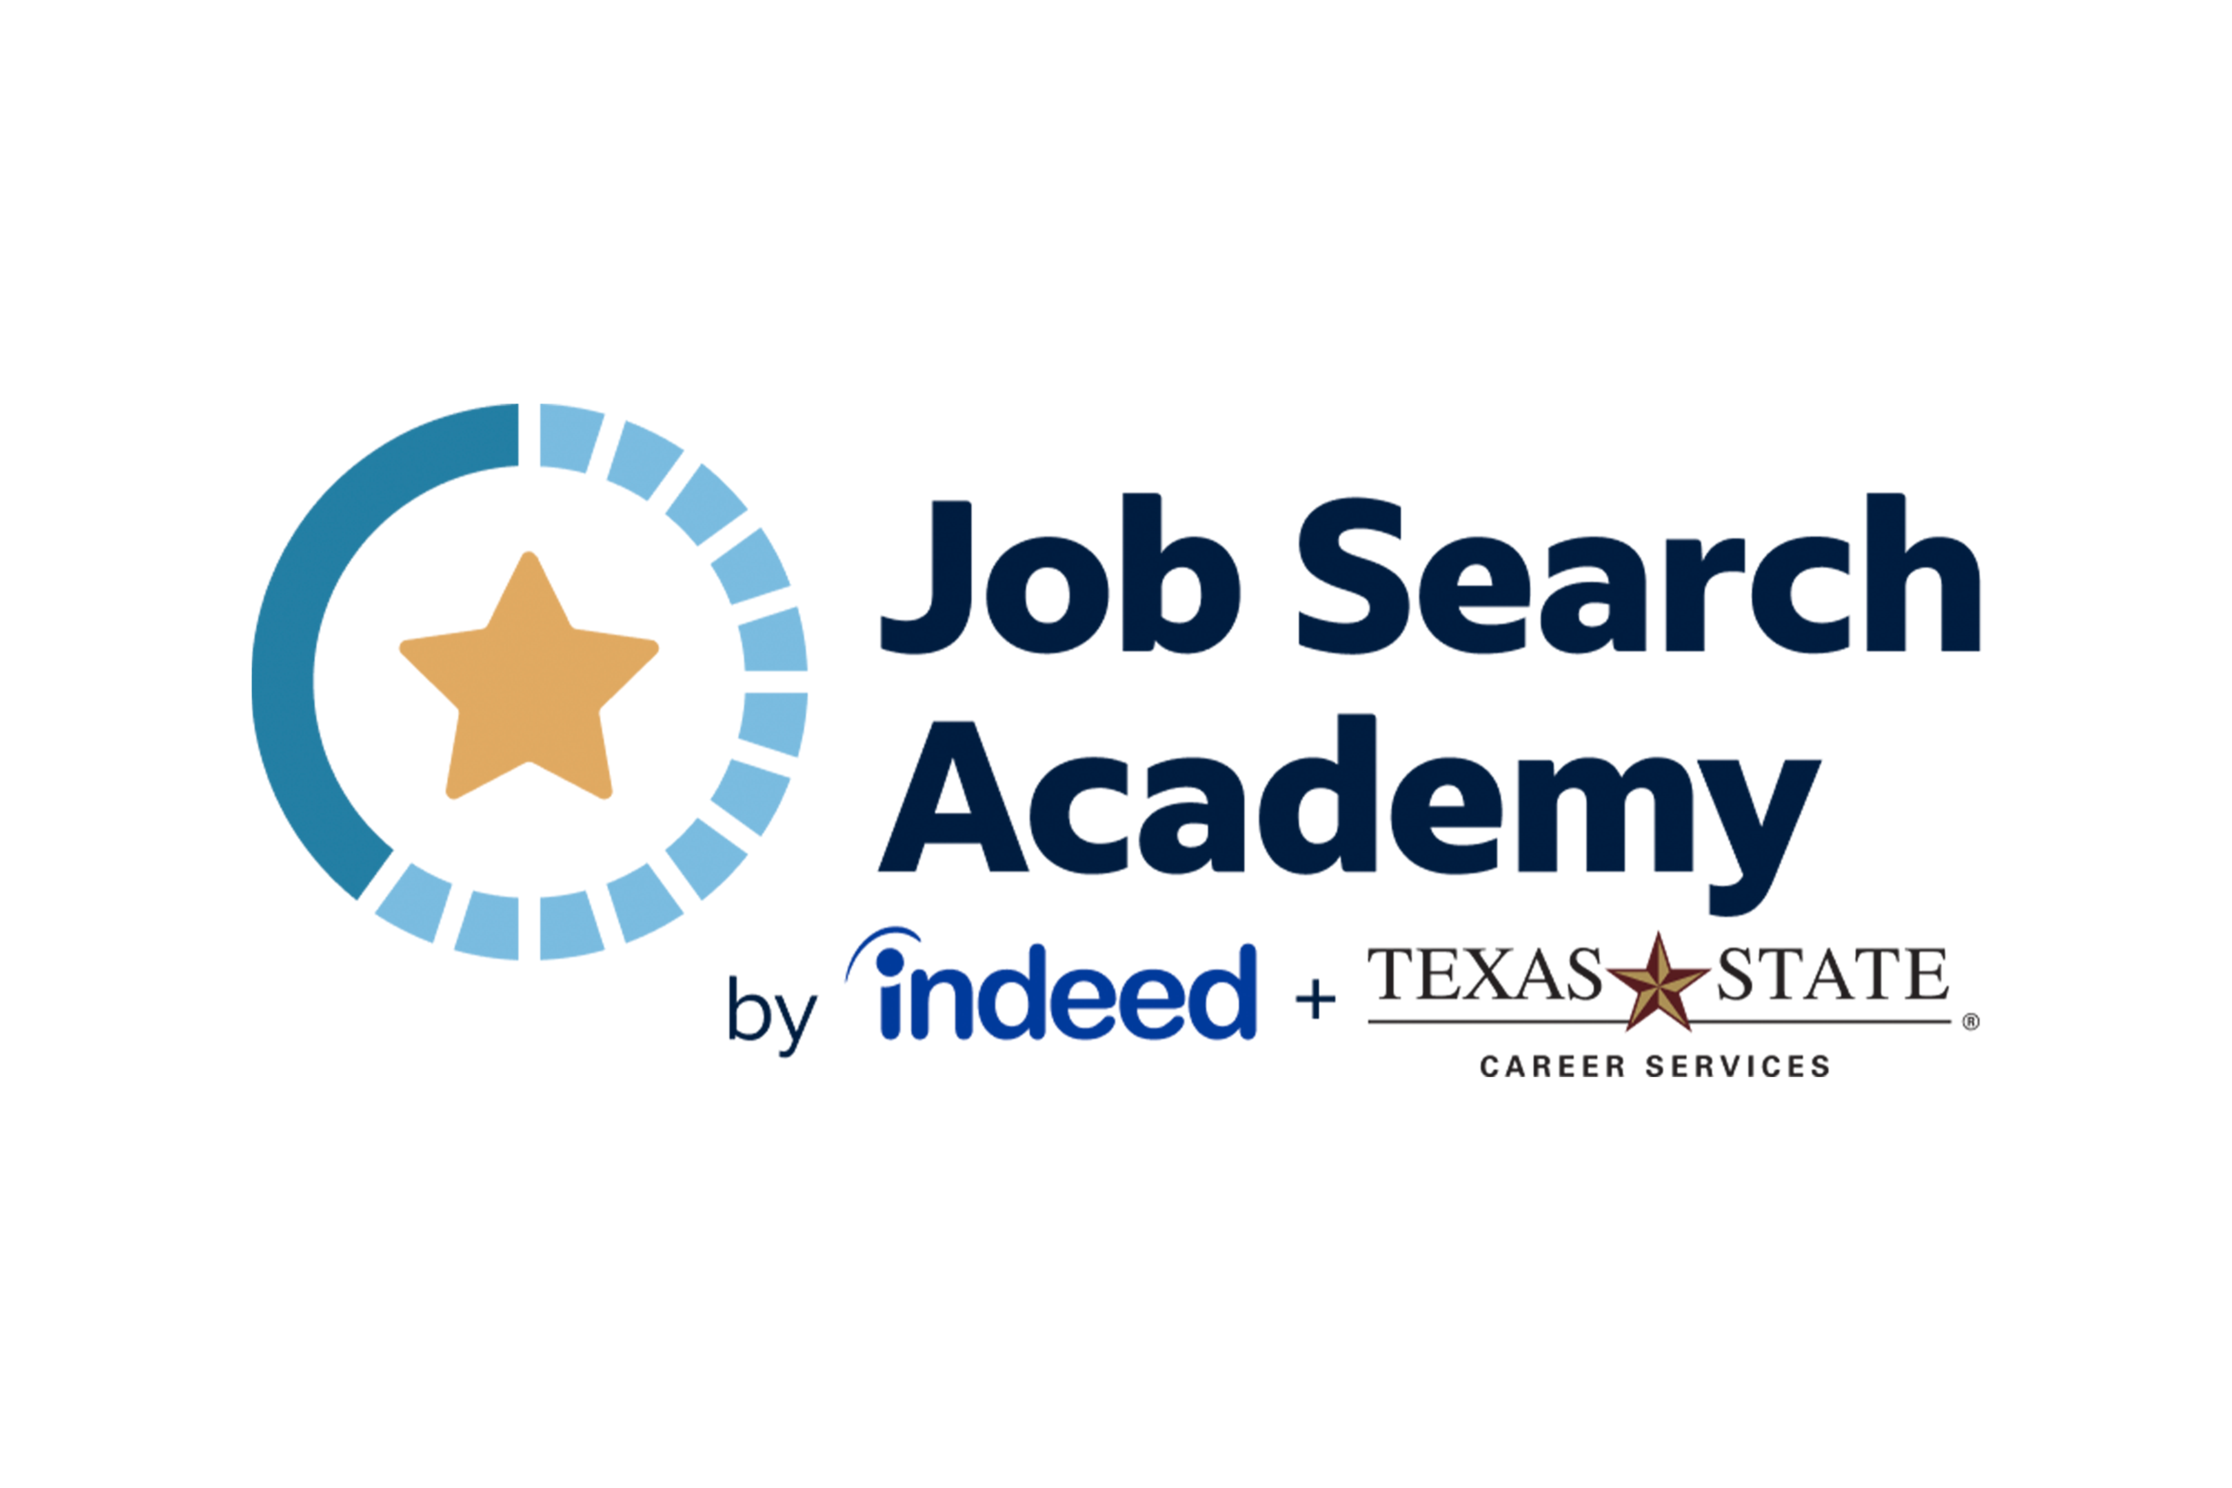 Indeed job search academy logo